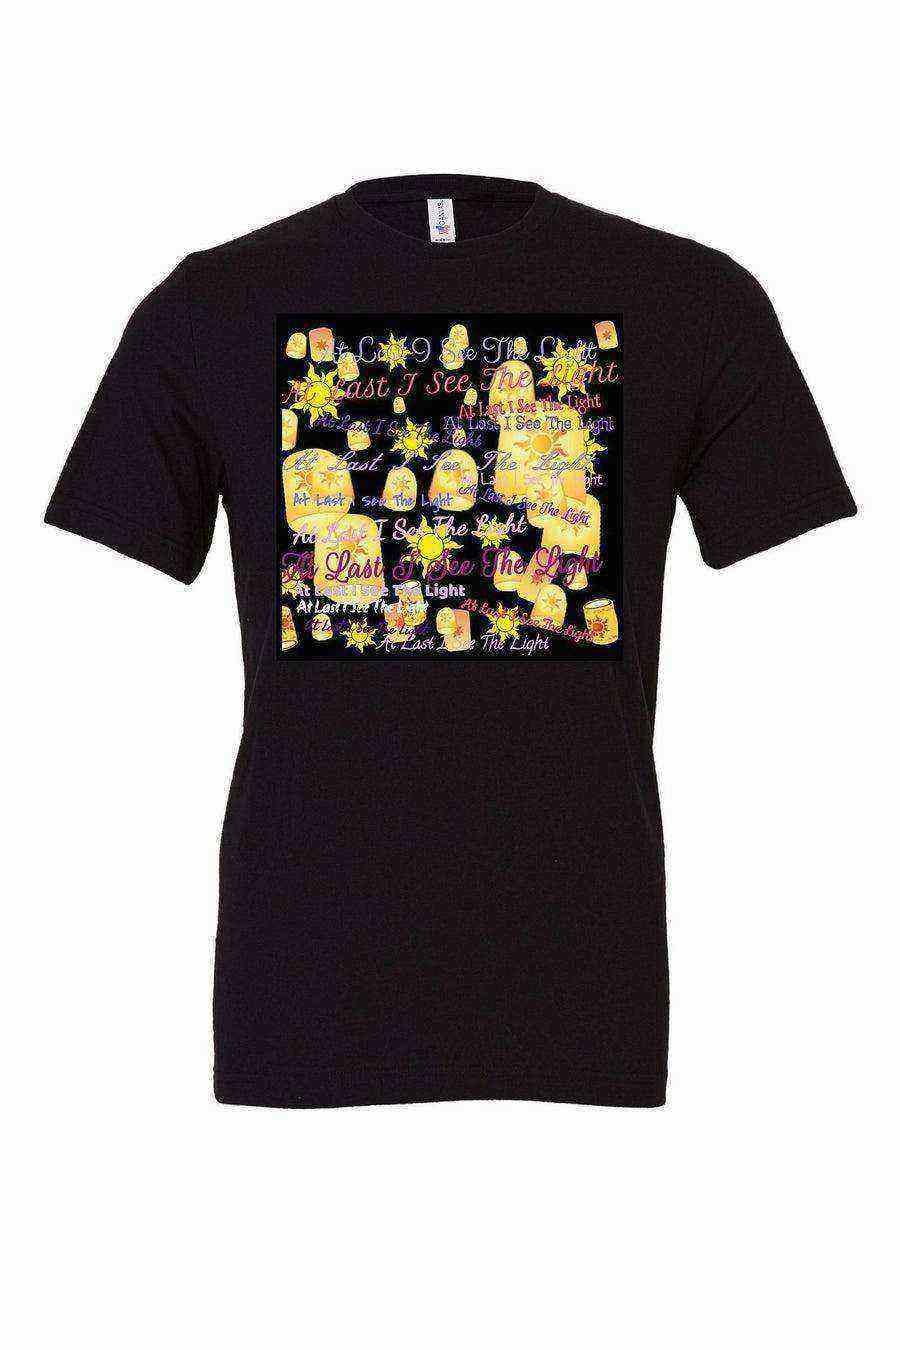 Womens | Rapunzel Graffiti Shirt | Tangled Graffiti Shirt - Dylan's Tees